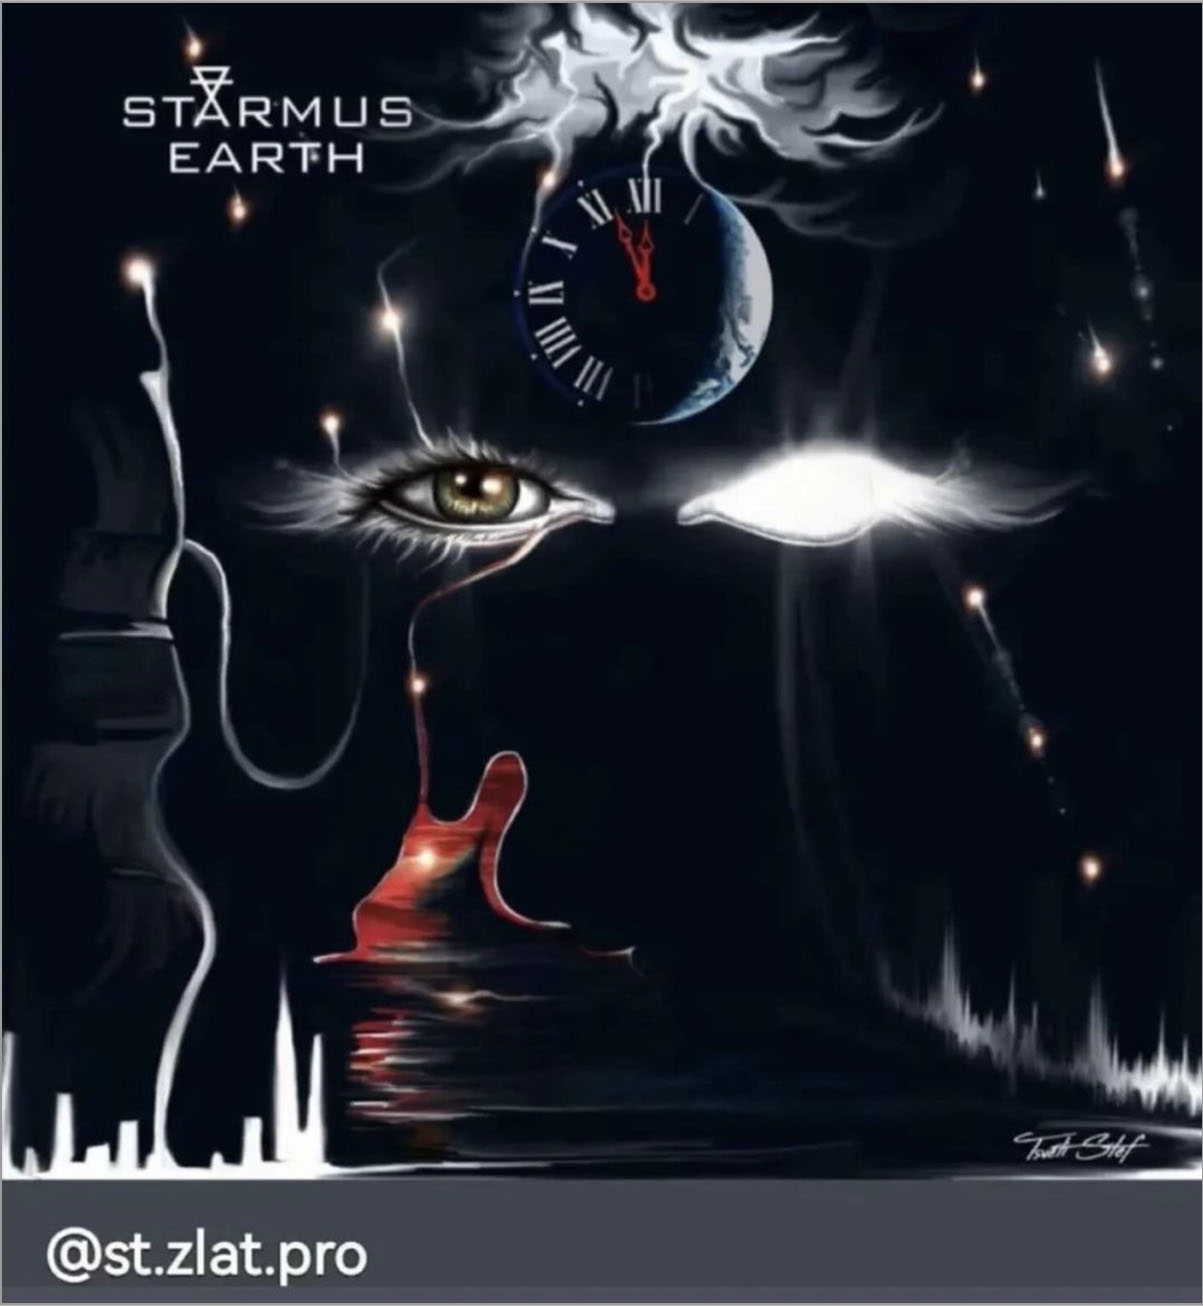 Starmus Earth by @st.zlat_.pro